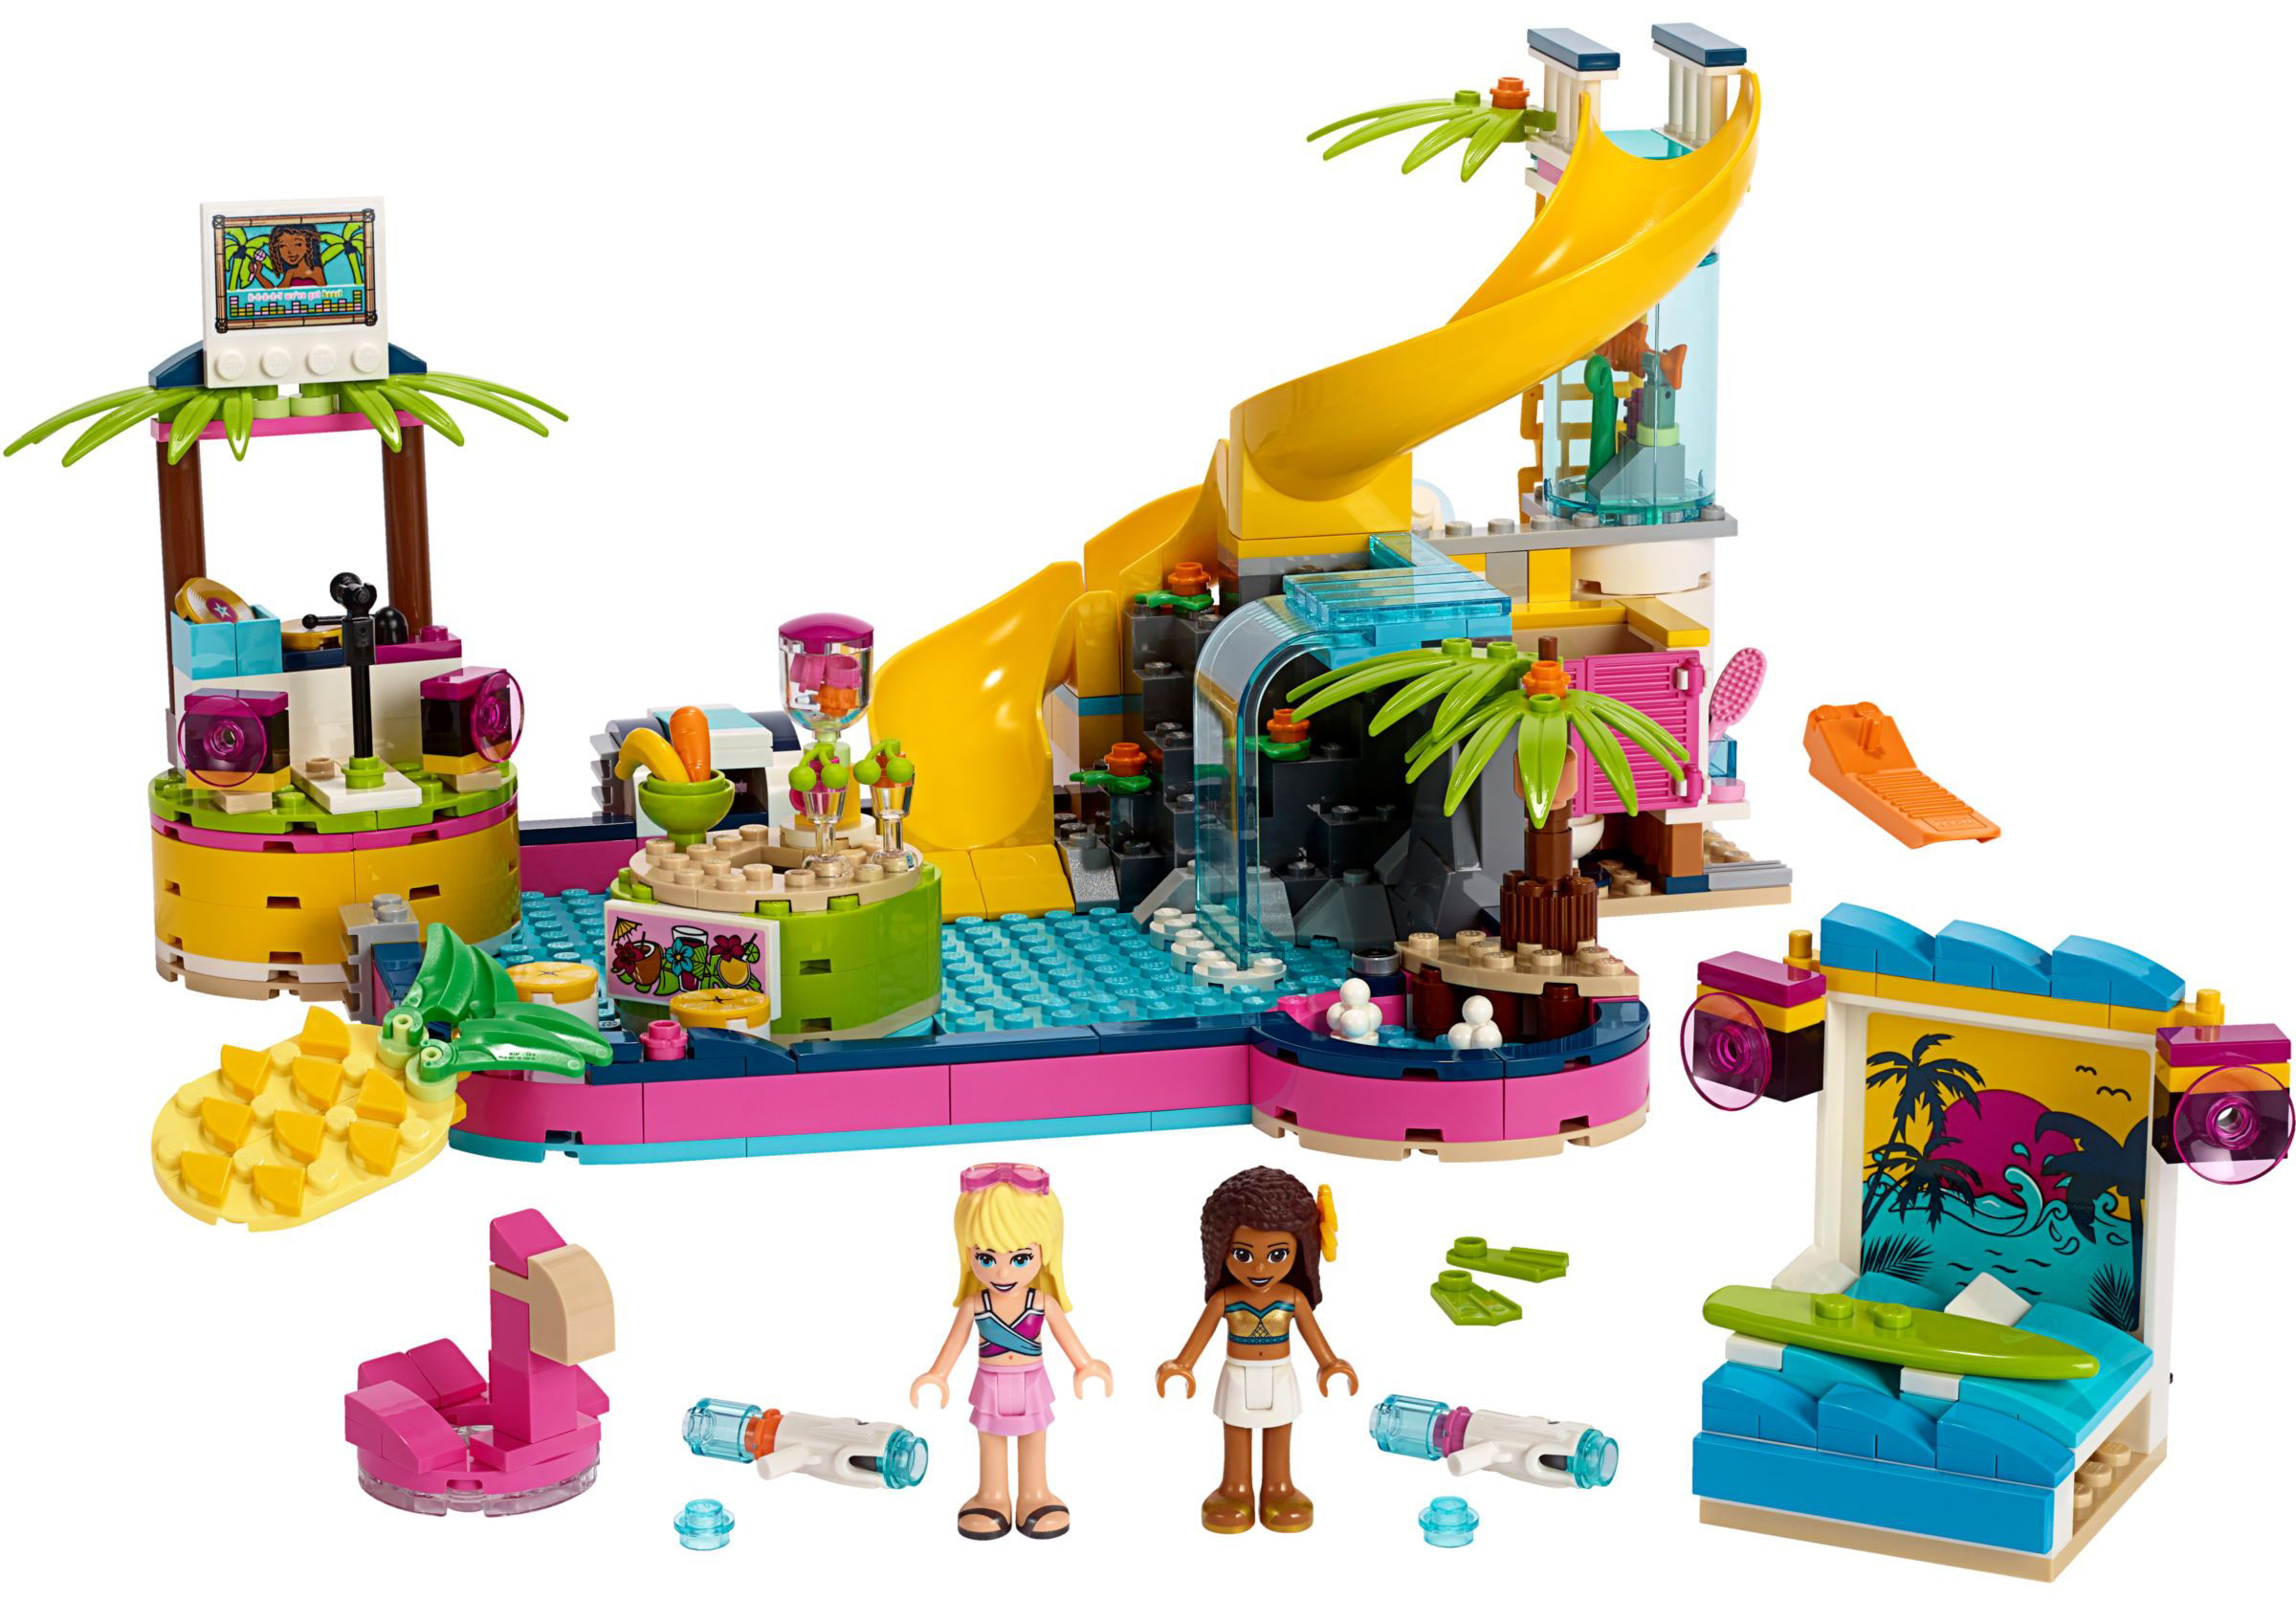 New LEGO Friends Summer Set Revealed BricksFanz